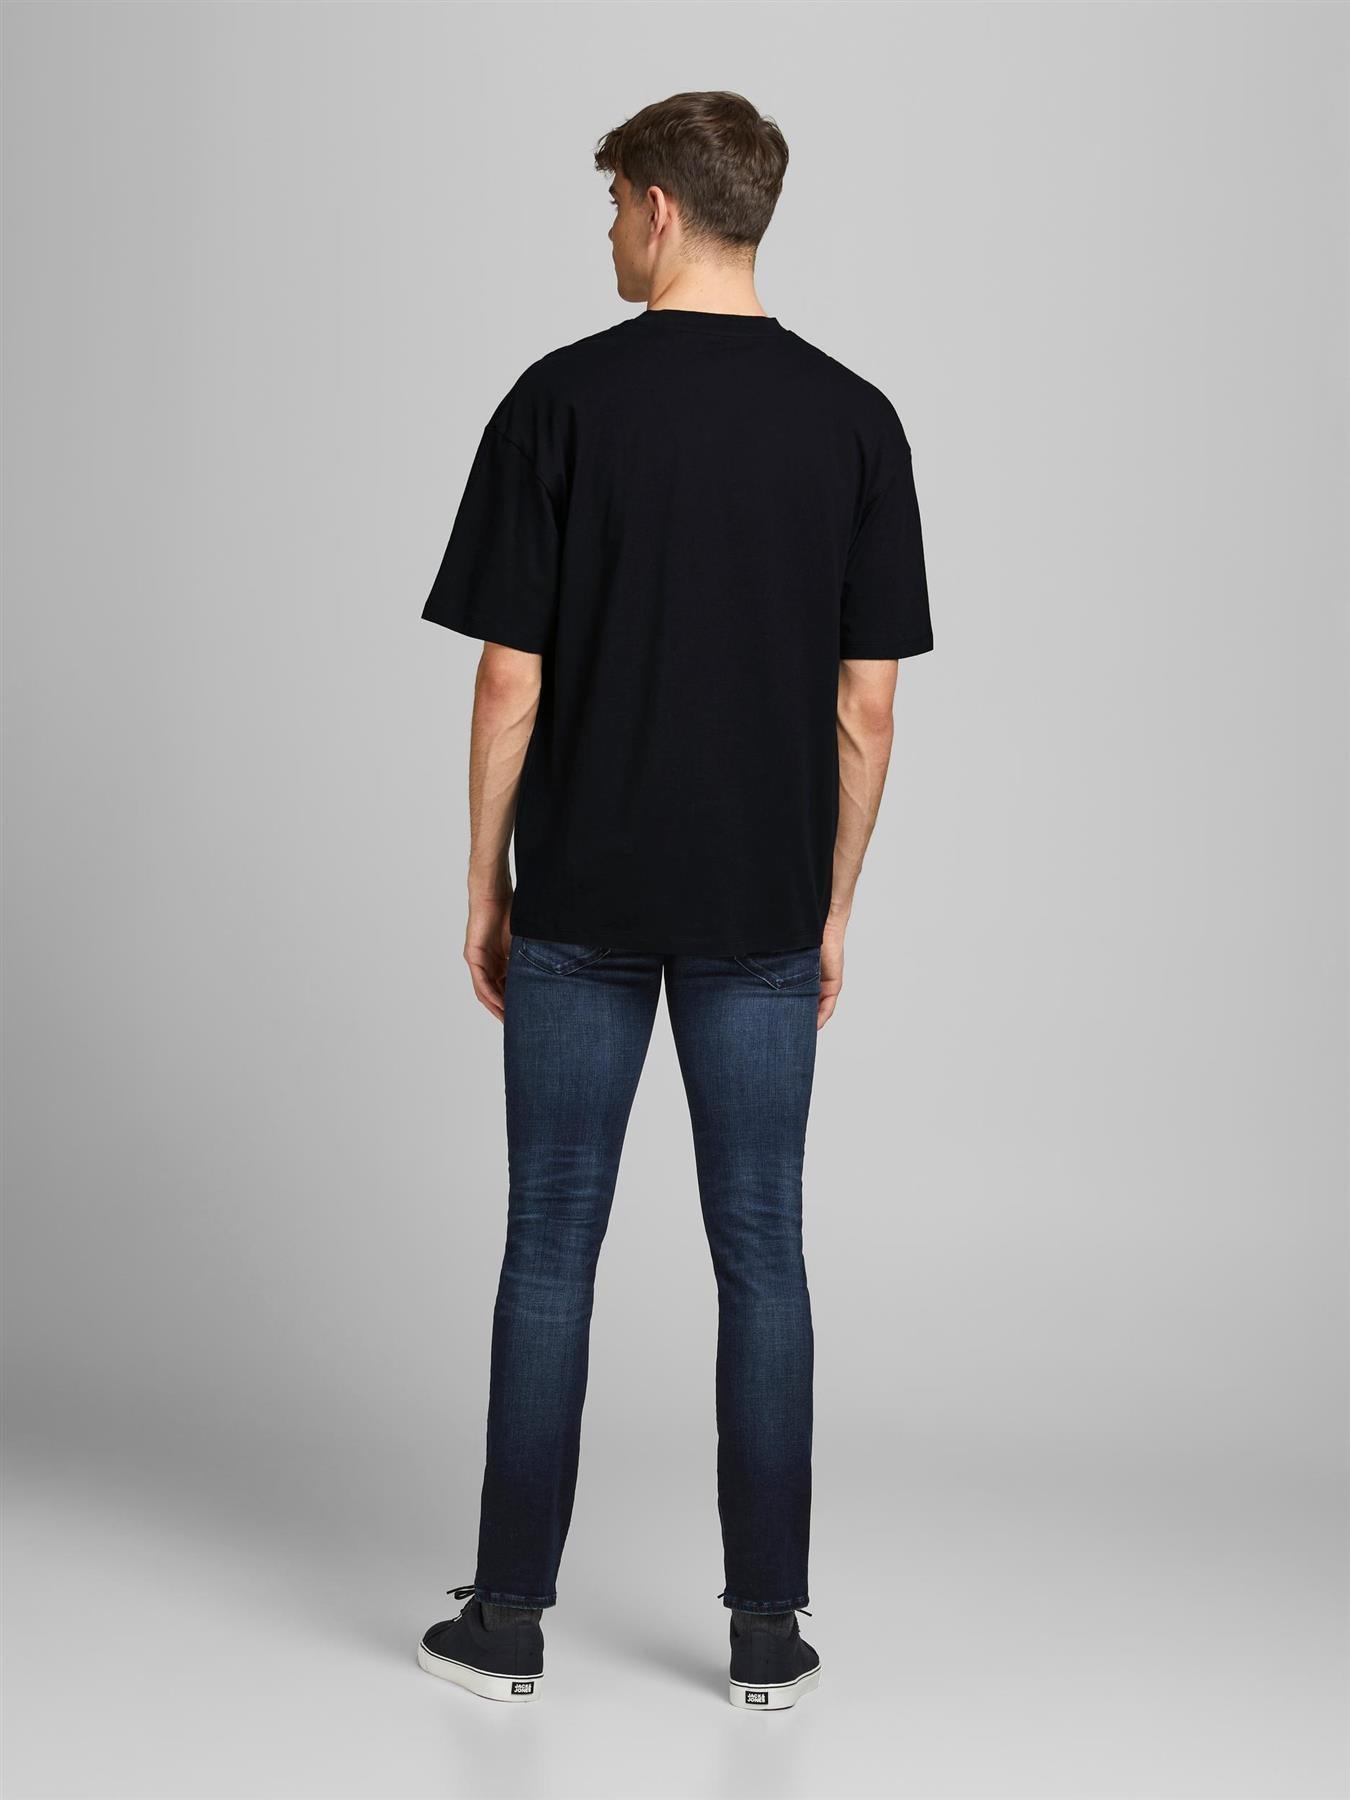 Jack & Jones Mens 'Brink' T-Shirt in Black - VR2 Clothing